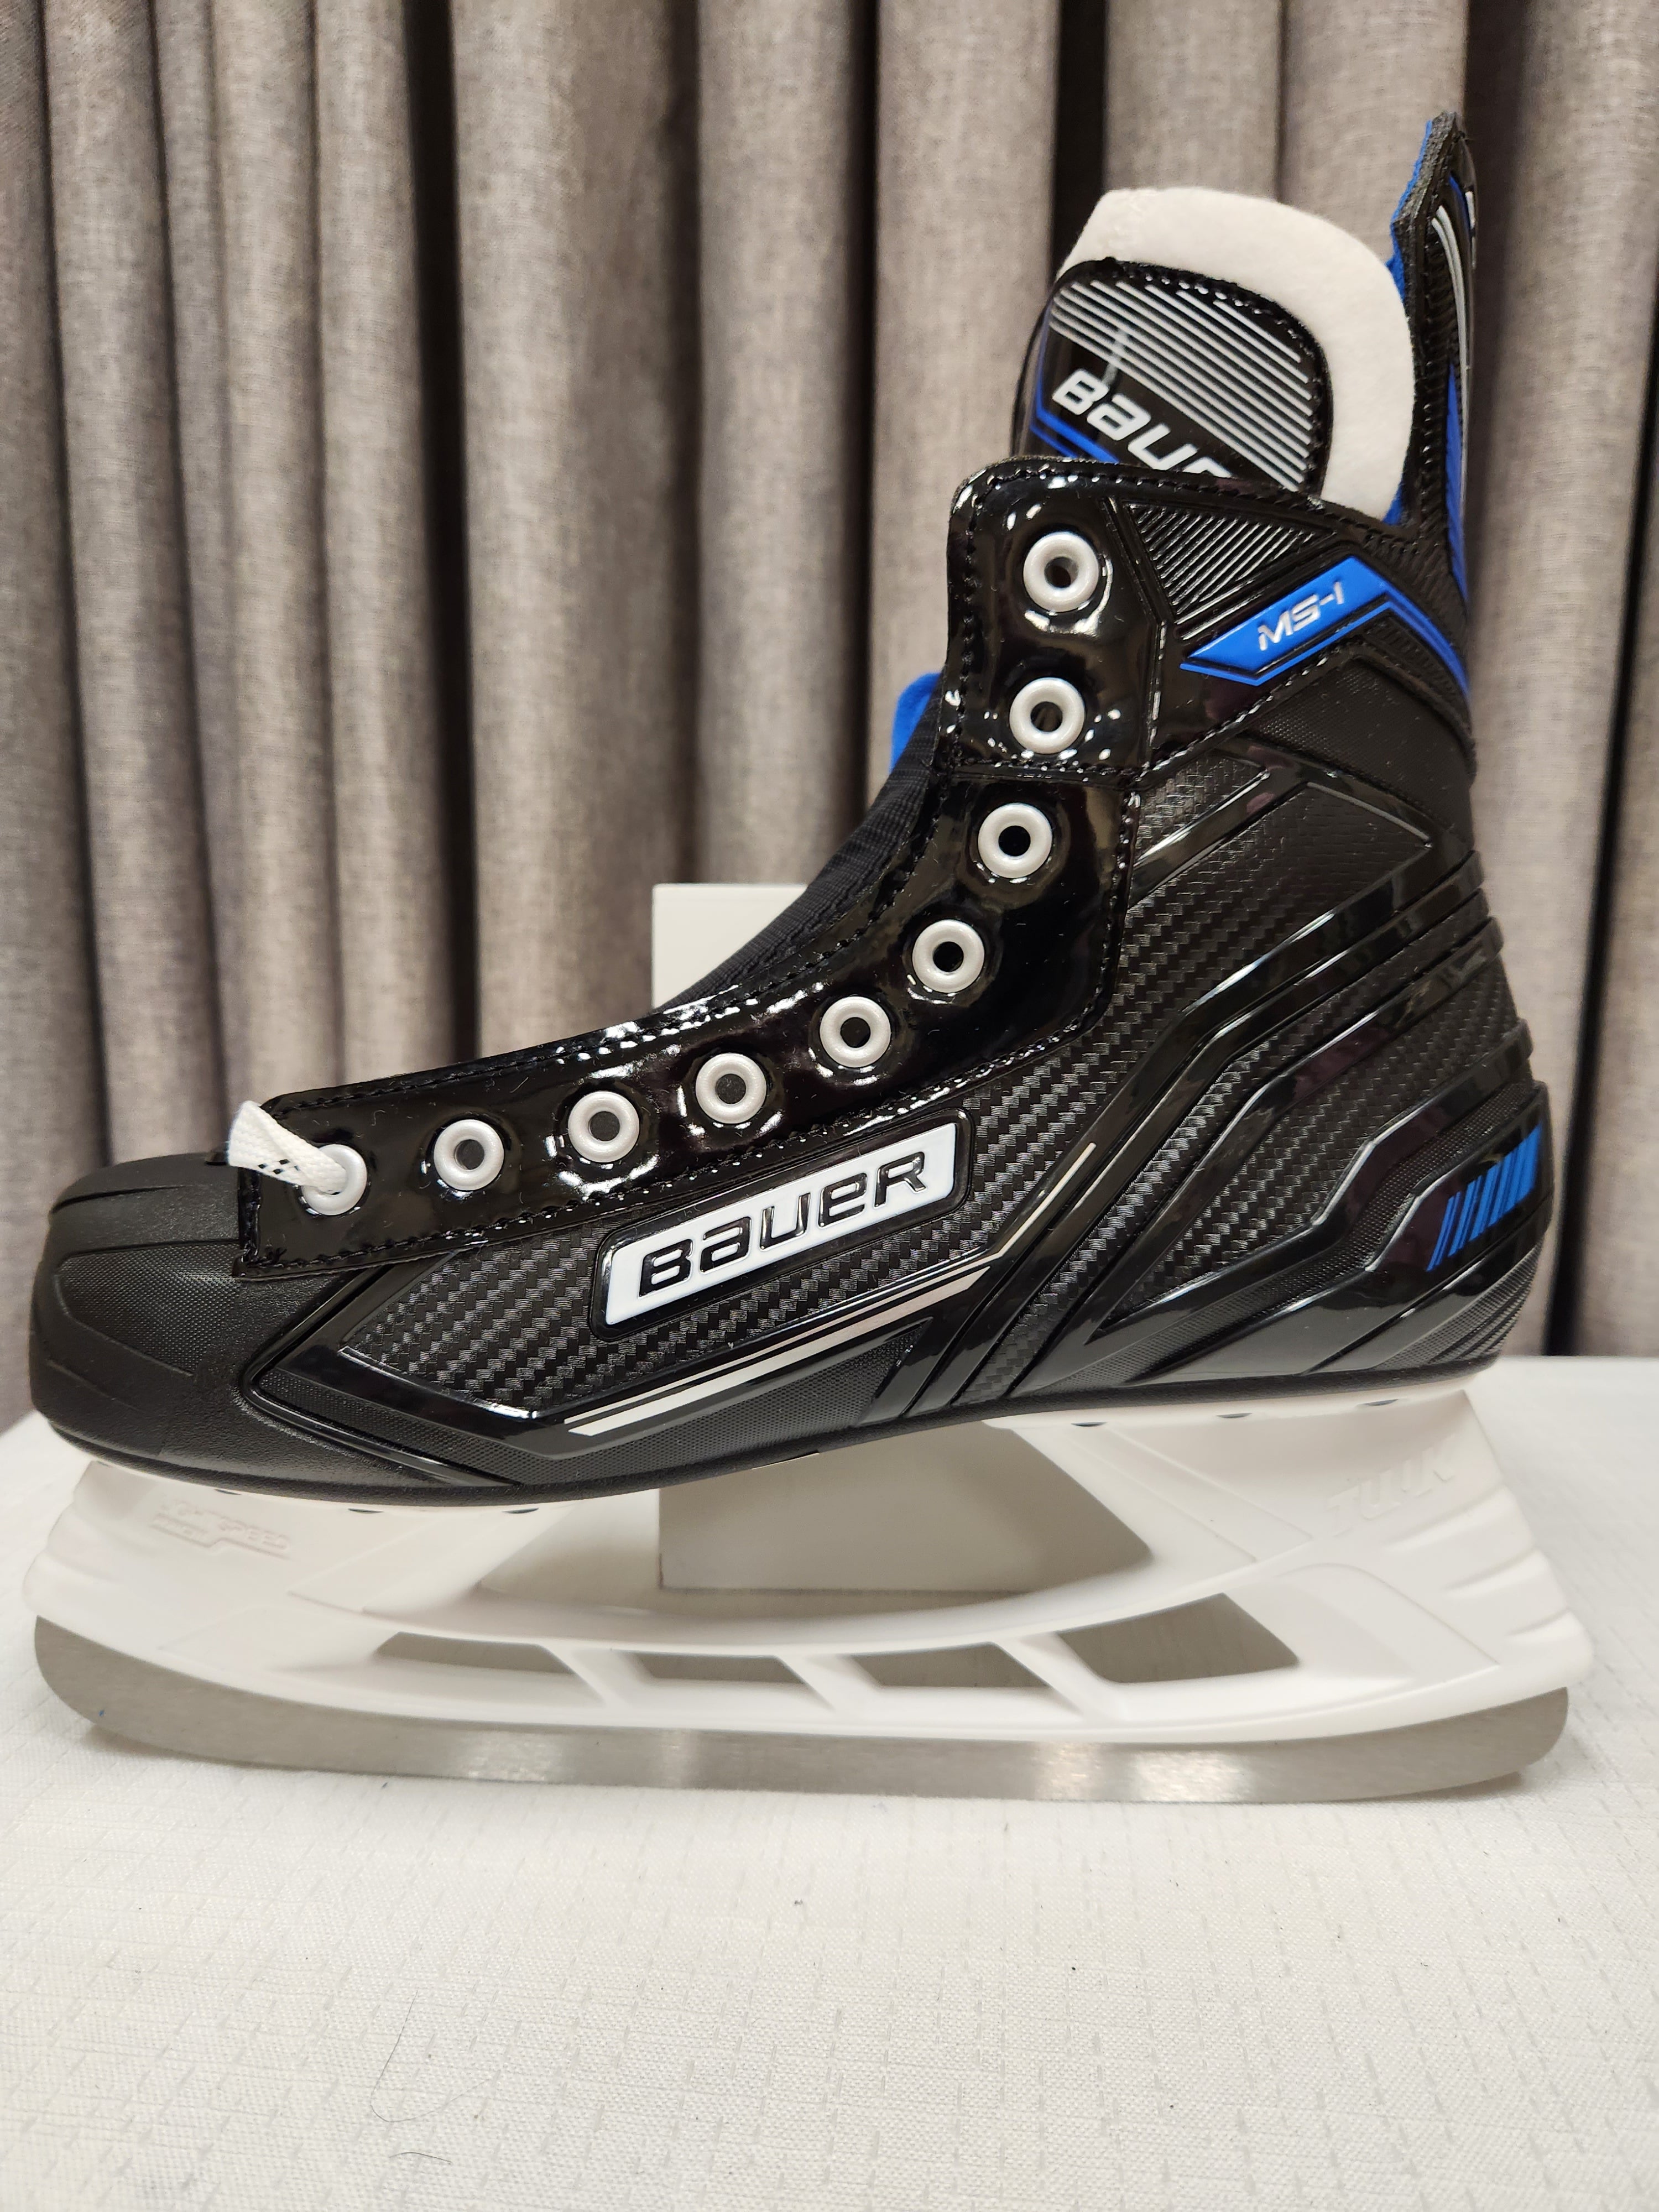 Bauer MS1 Ice Hockey Skates